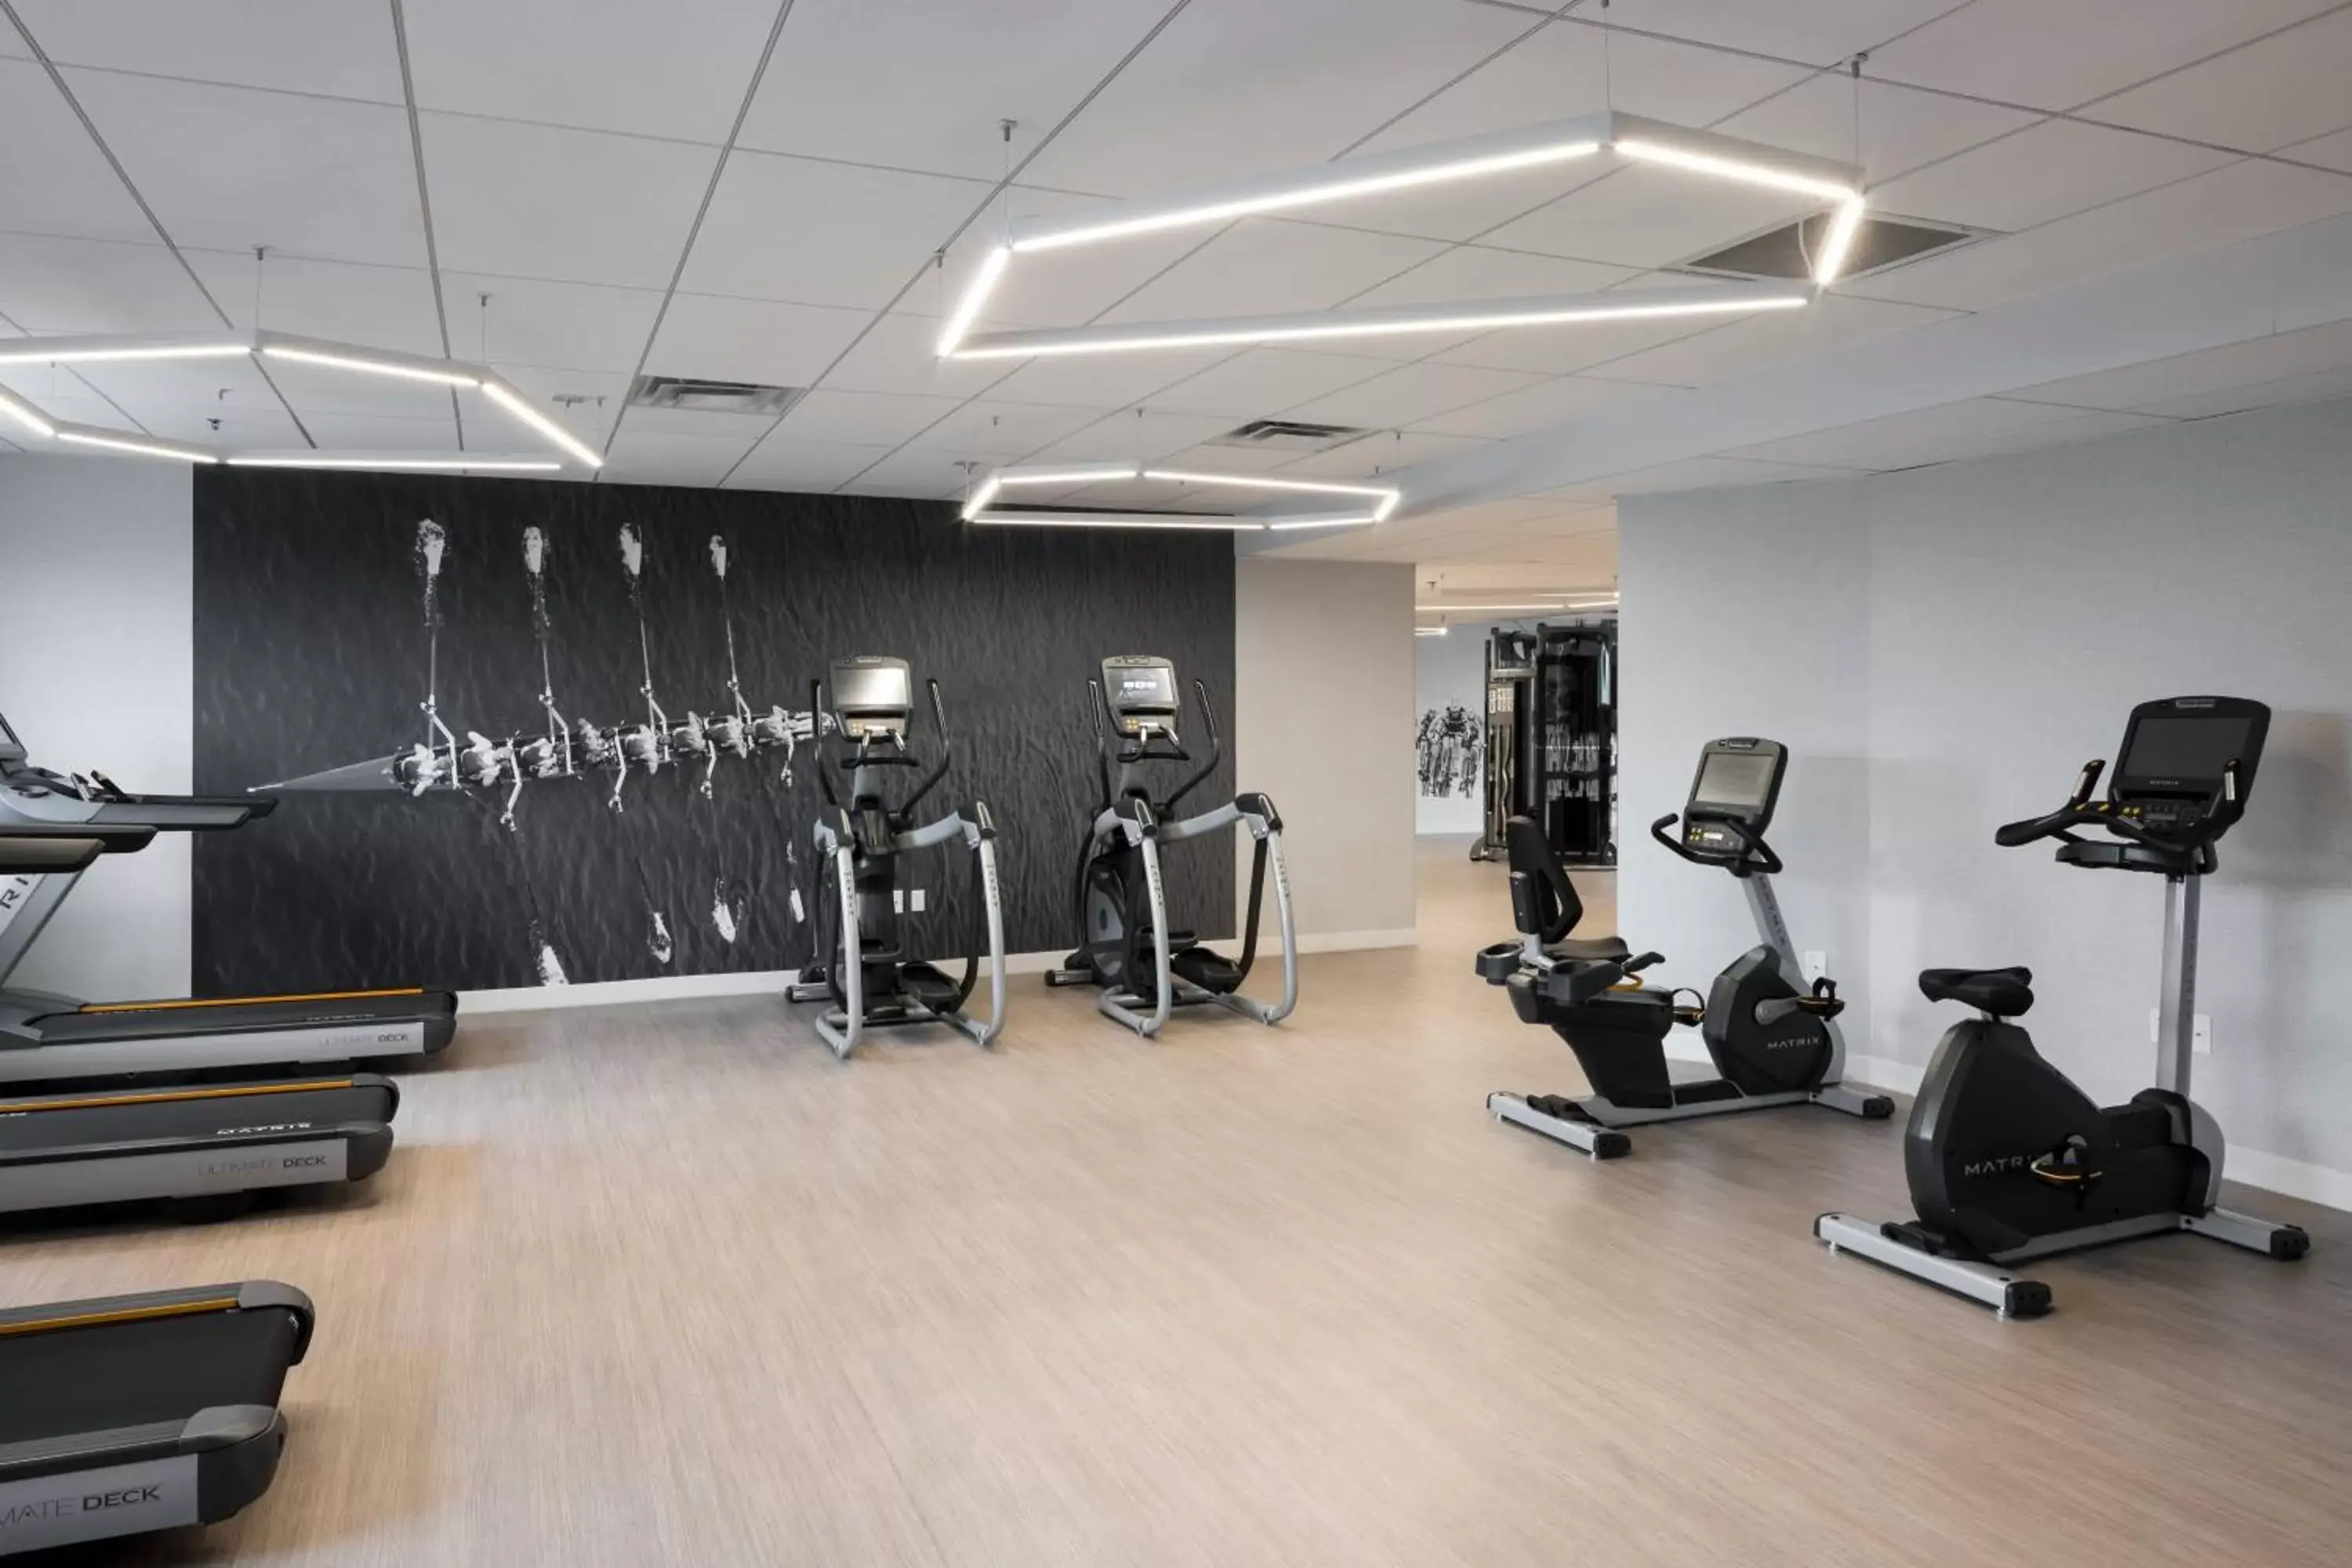 Fitness centre/facilities, Fitness Center/Facilities in Richmond Marriott